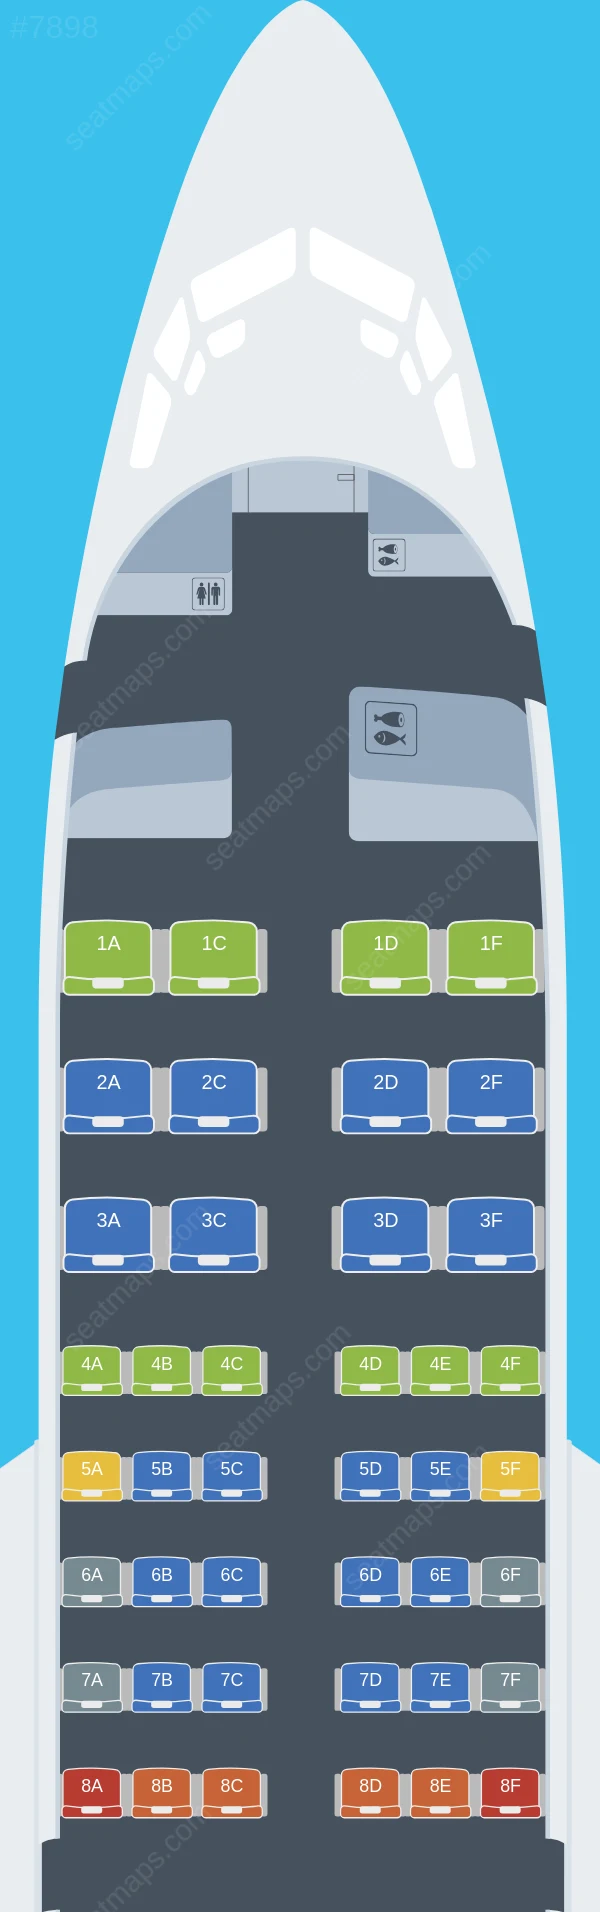 Air Peace Boeing 737-500 seatmap preview